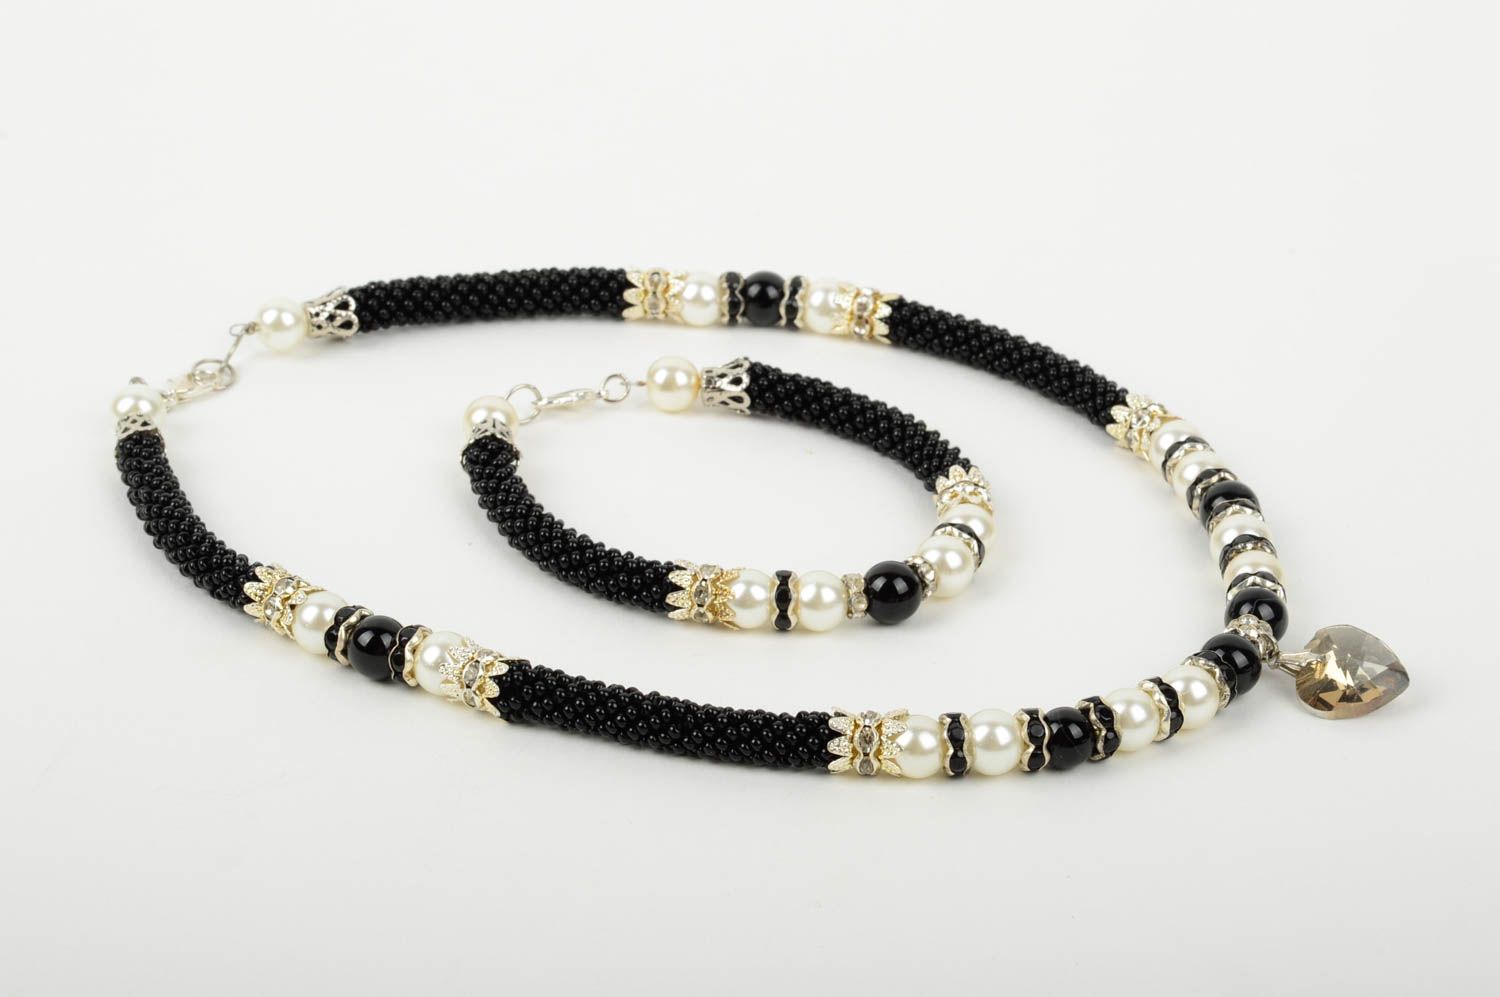 Beaded cord necklace beaded bracelet stylish evening jewelry fashion jewelry photo 2